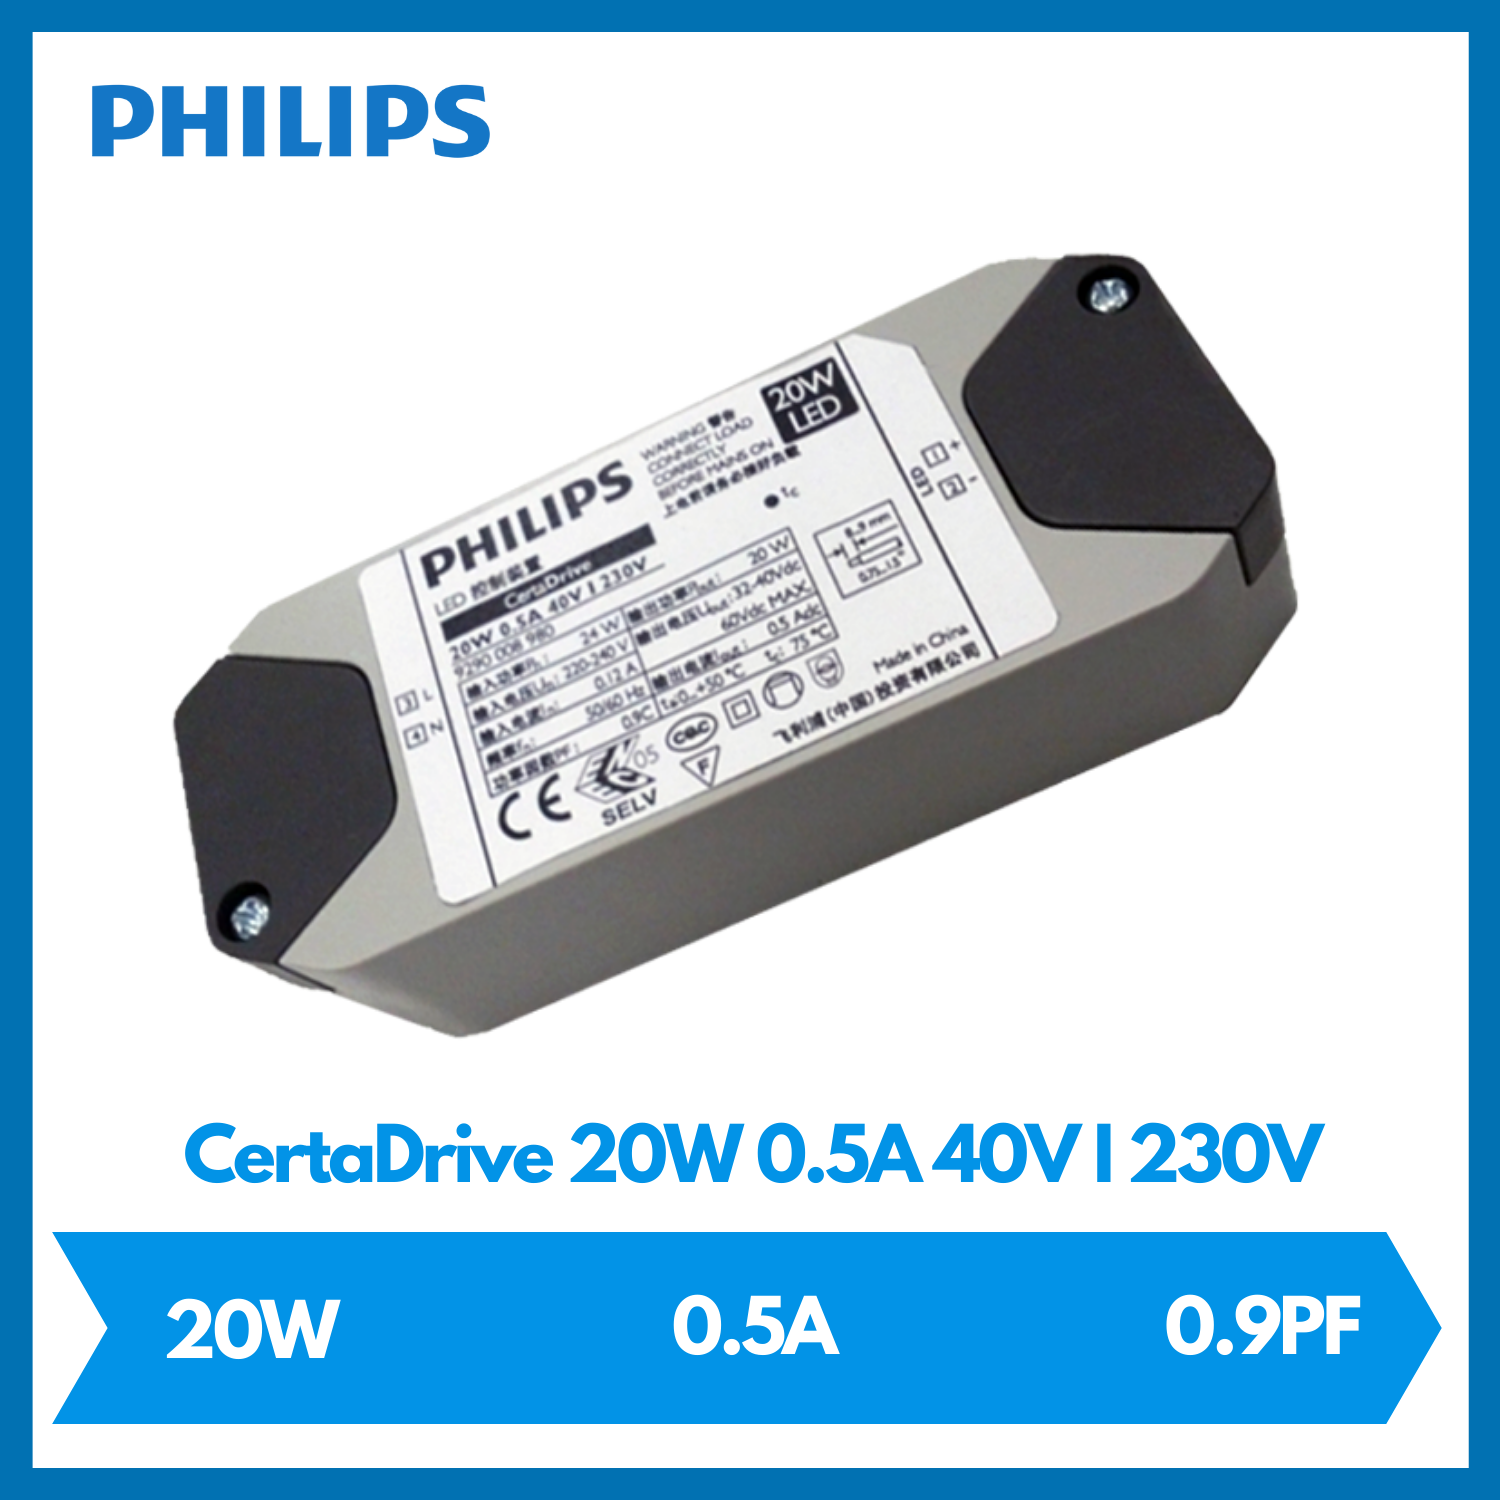 PHILIPS CertaDrive 20W 0.5A 40V I 230V